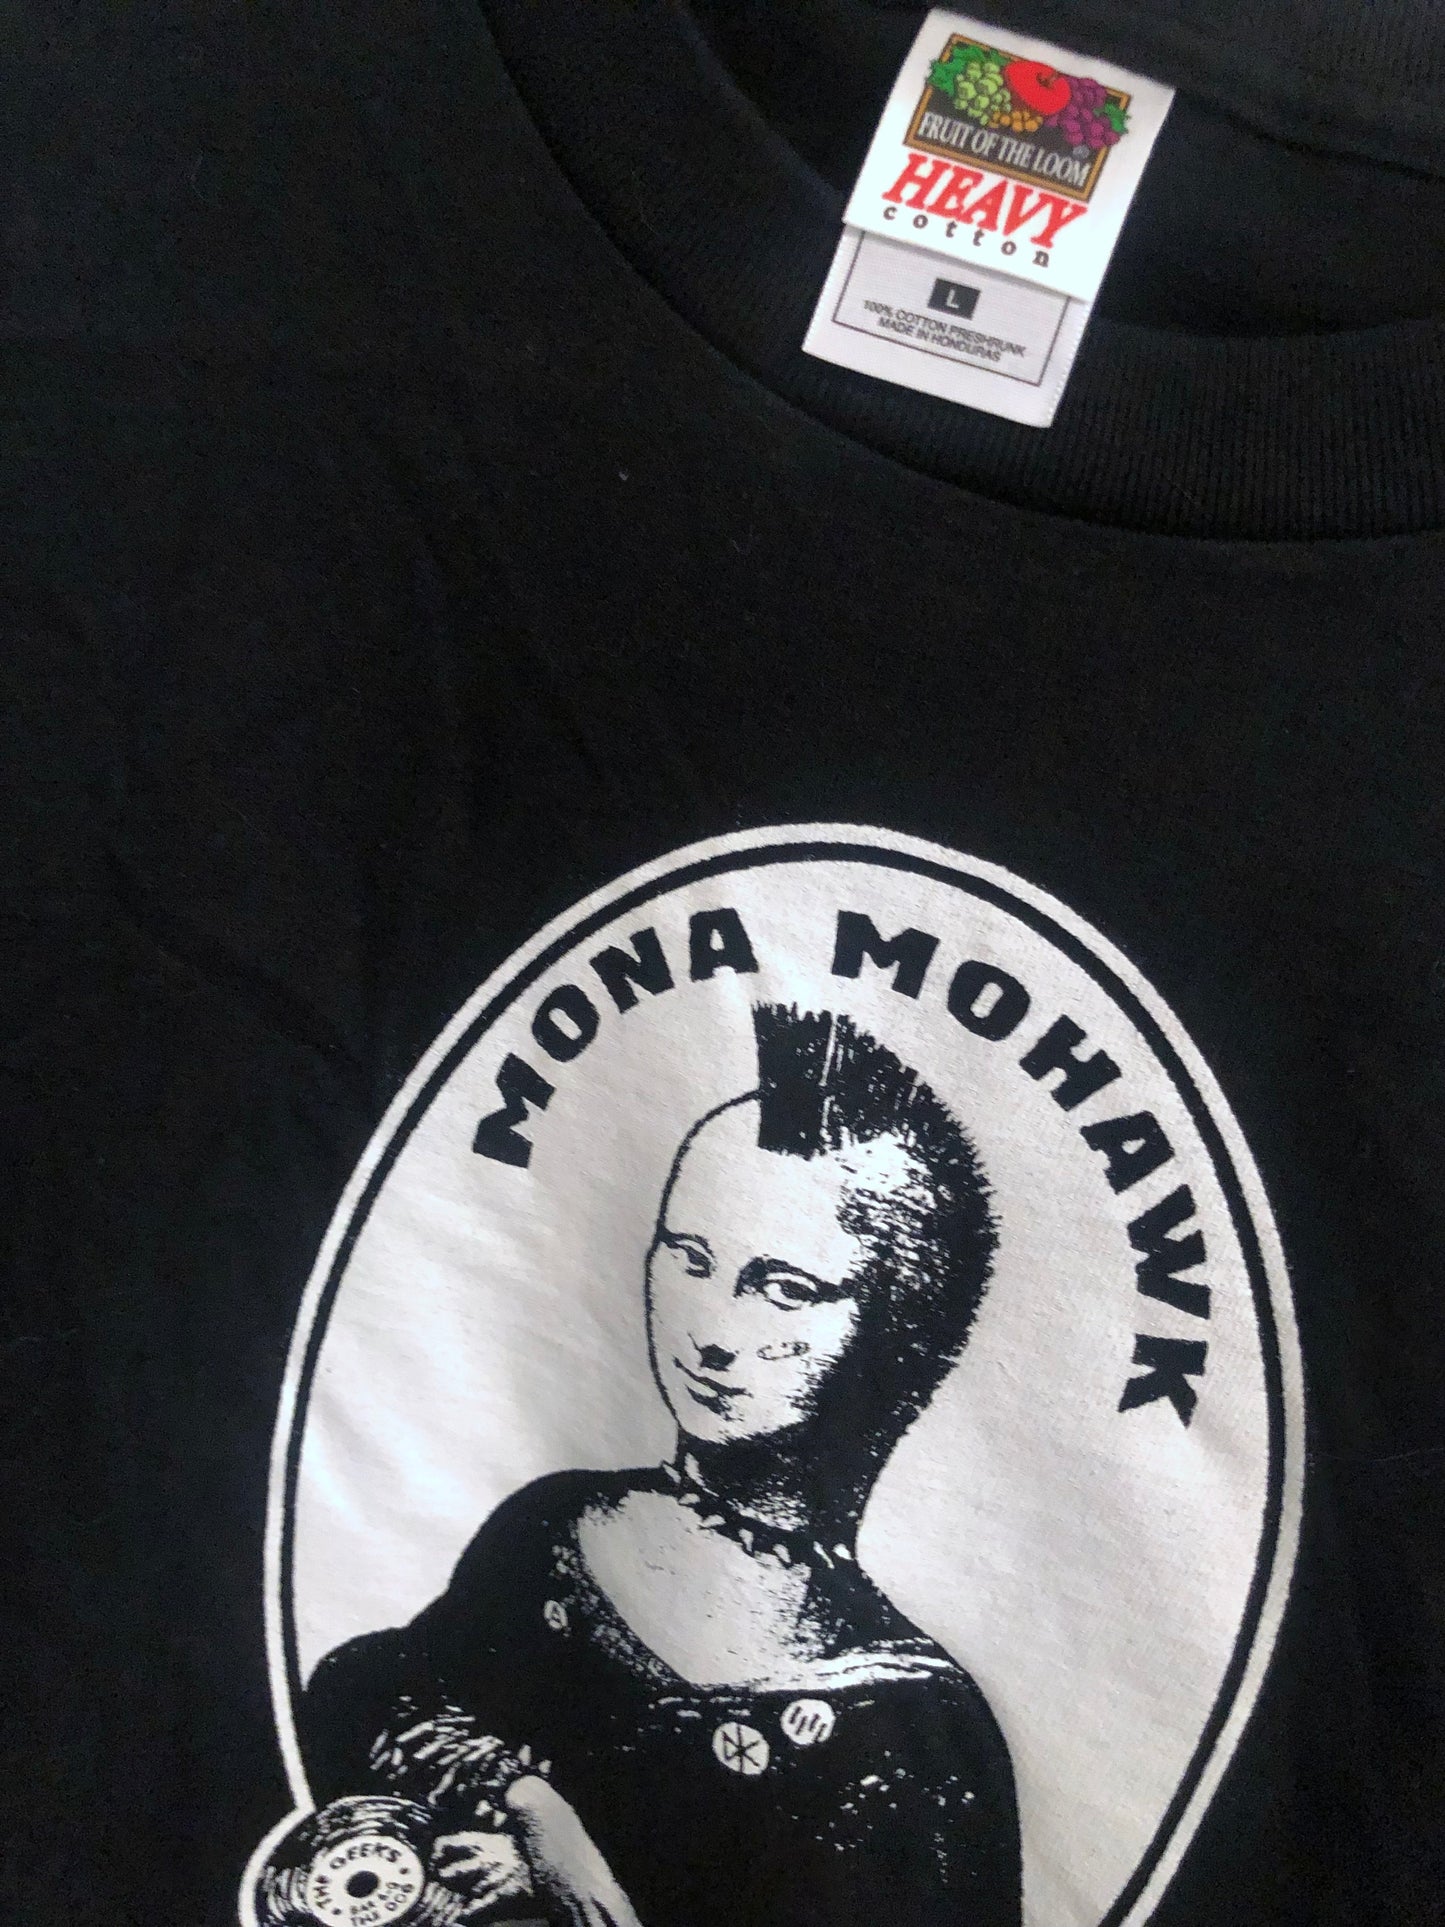 Winston Smith "Mona Mohawk" Vintage T-shirt